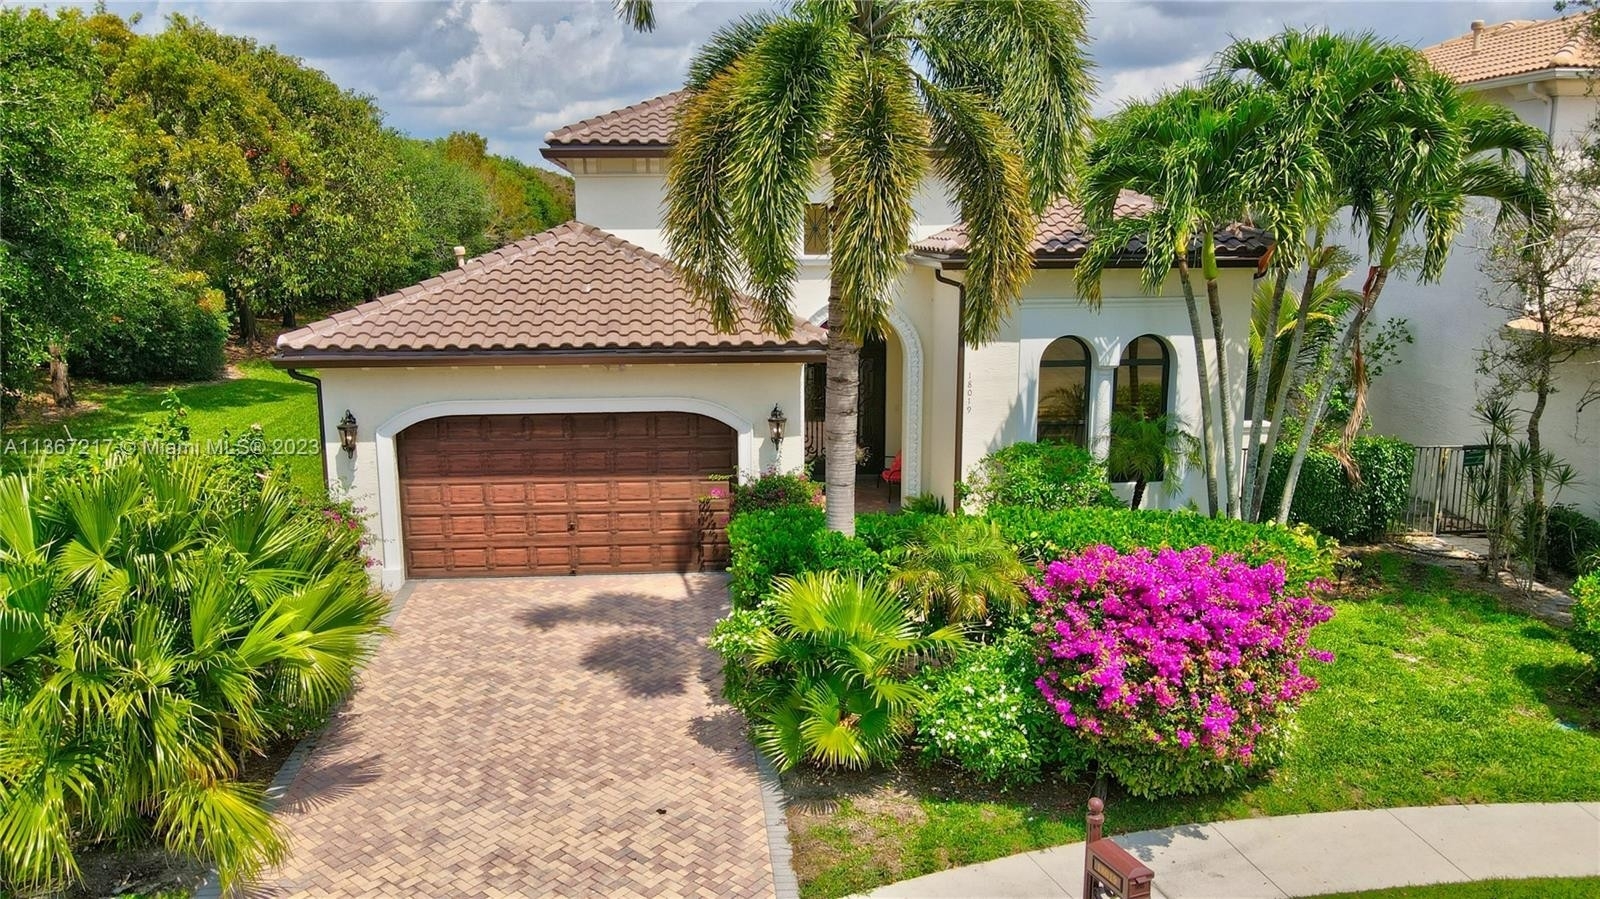 Property at Oaks at Boca Raton, Boca Raton, FL 33496